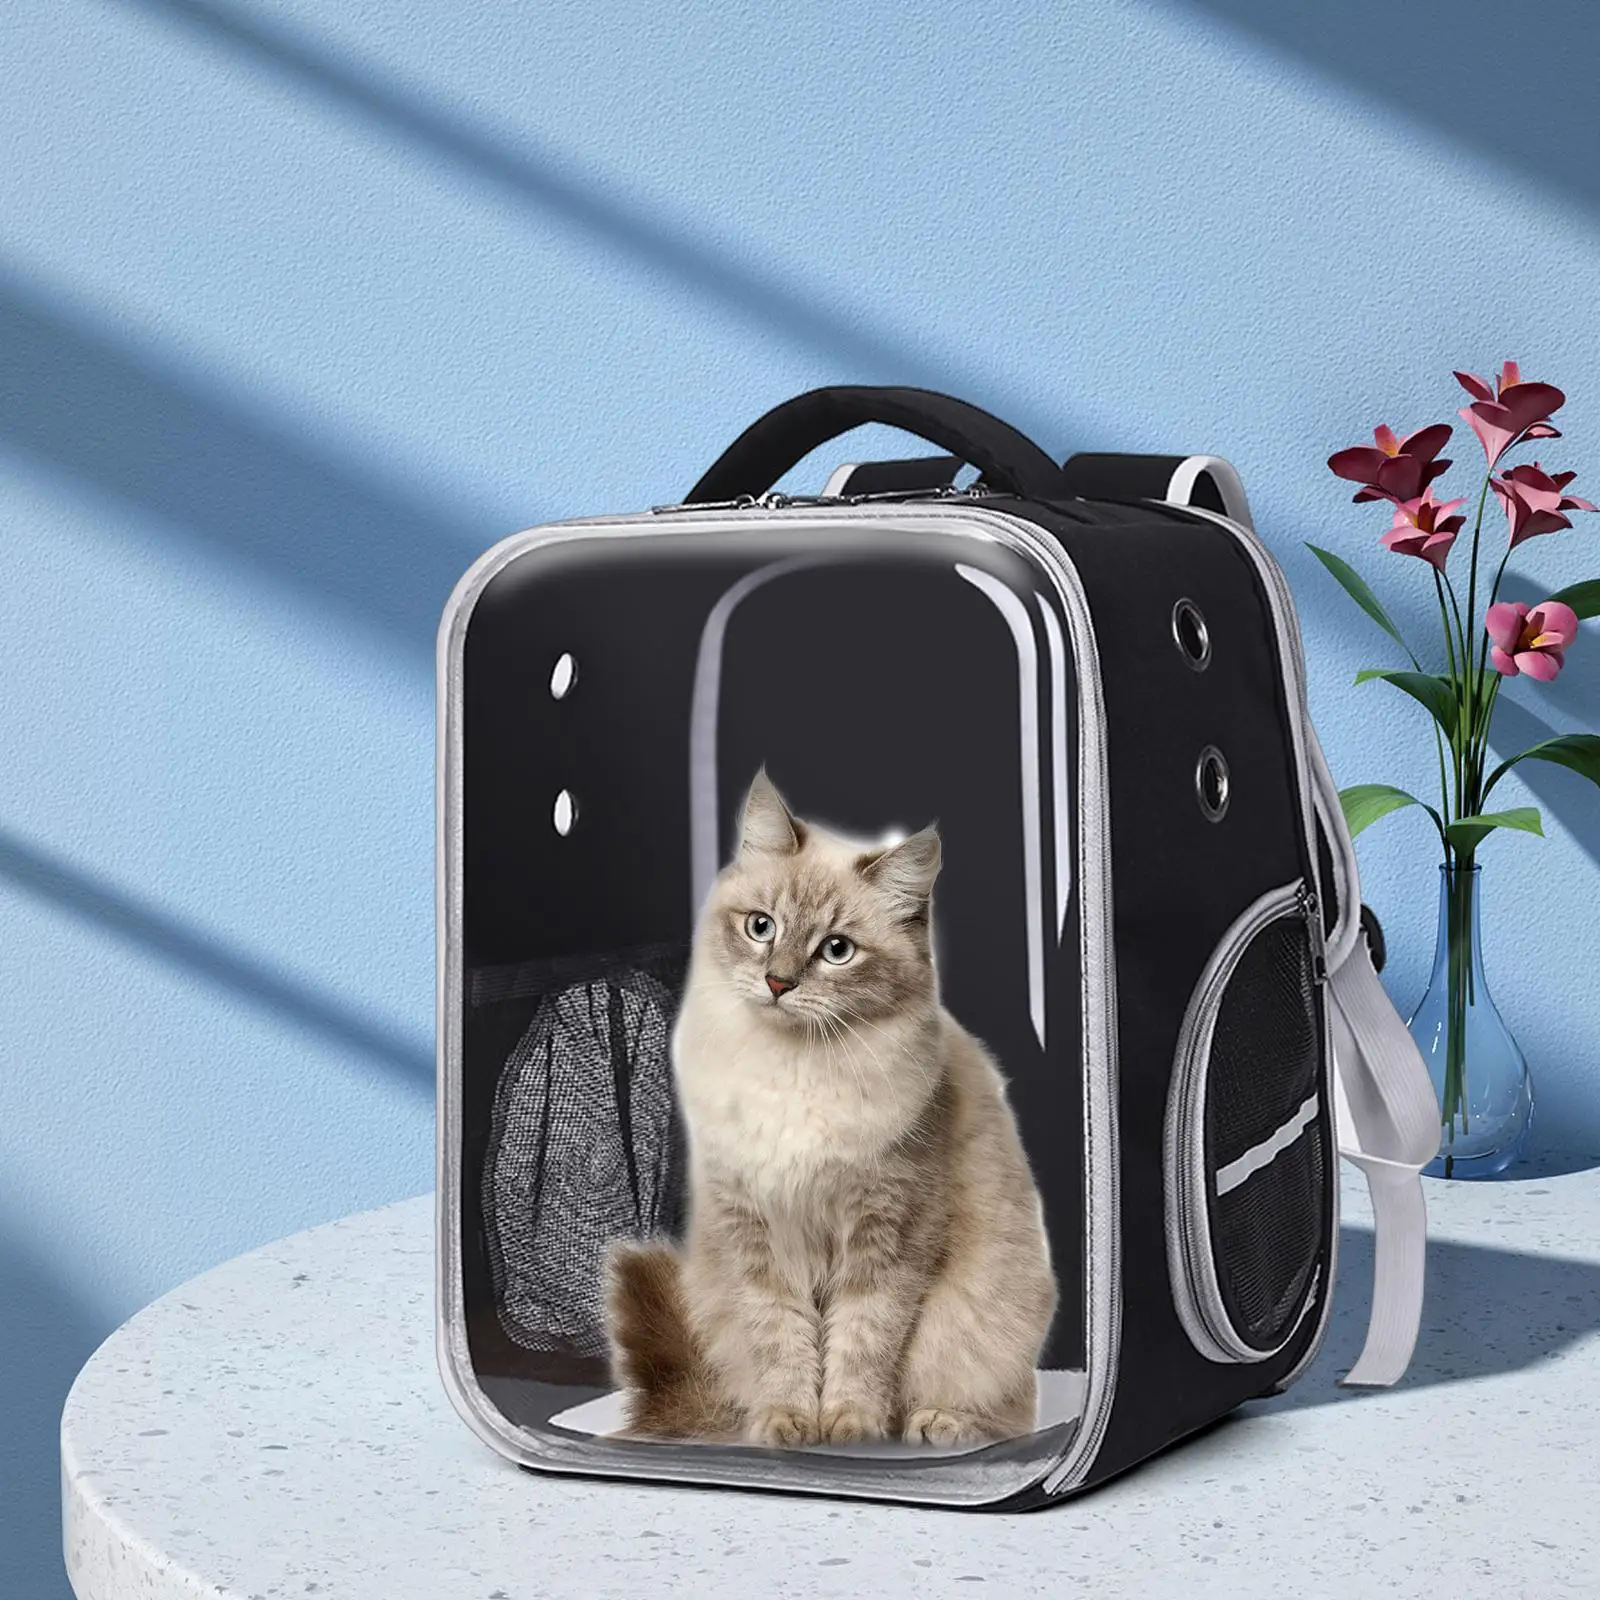 Cat Carrier Bag Oxford Cloth Handbag for Travel Strolling Walking Outdoor Activities